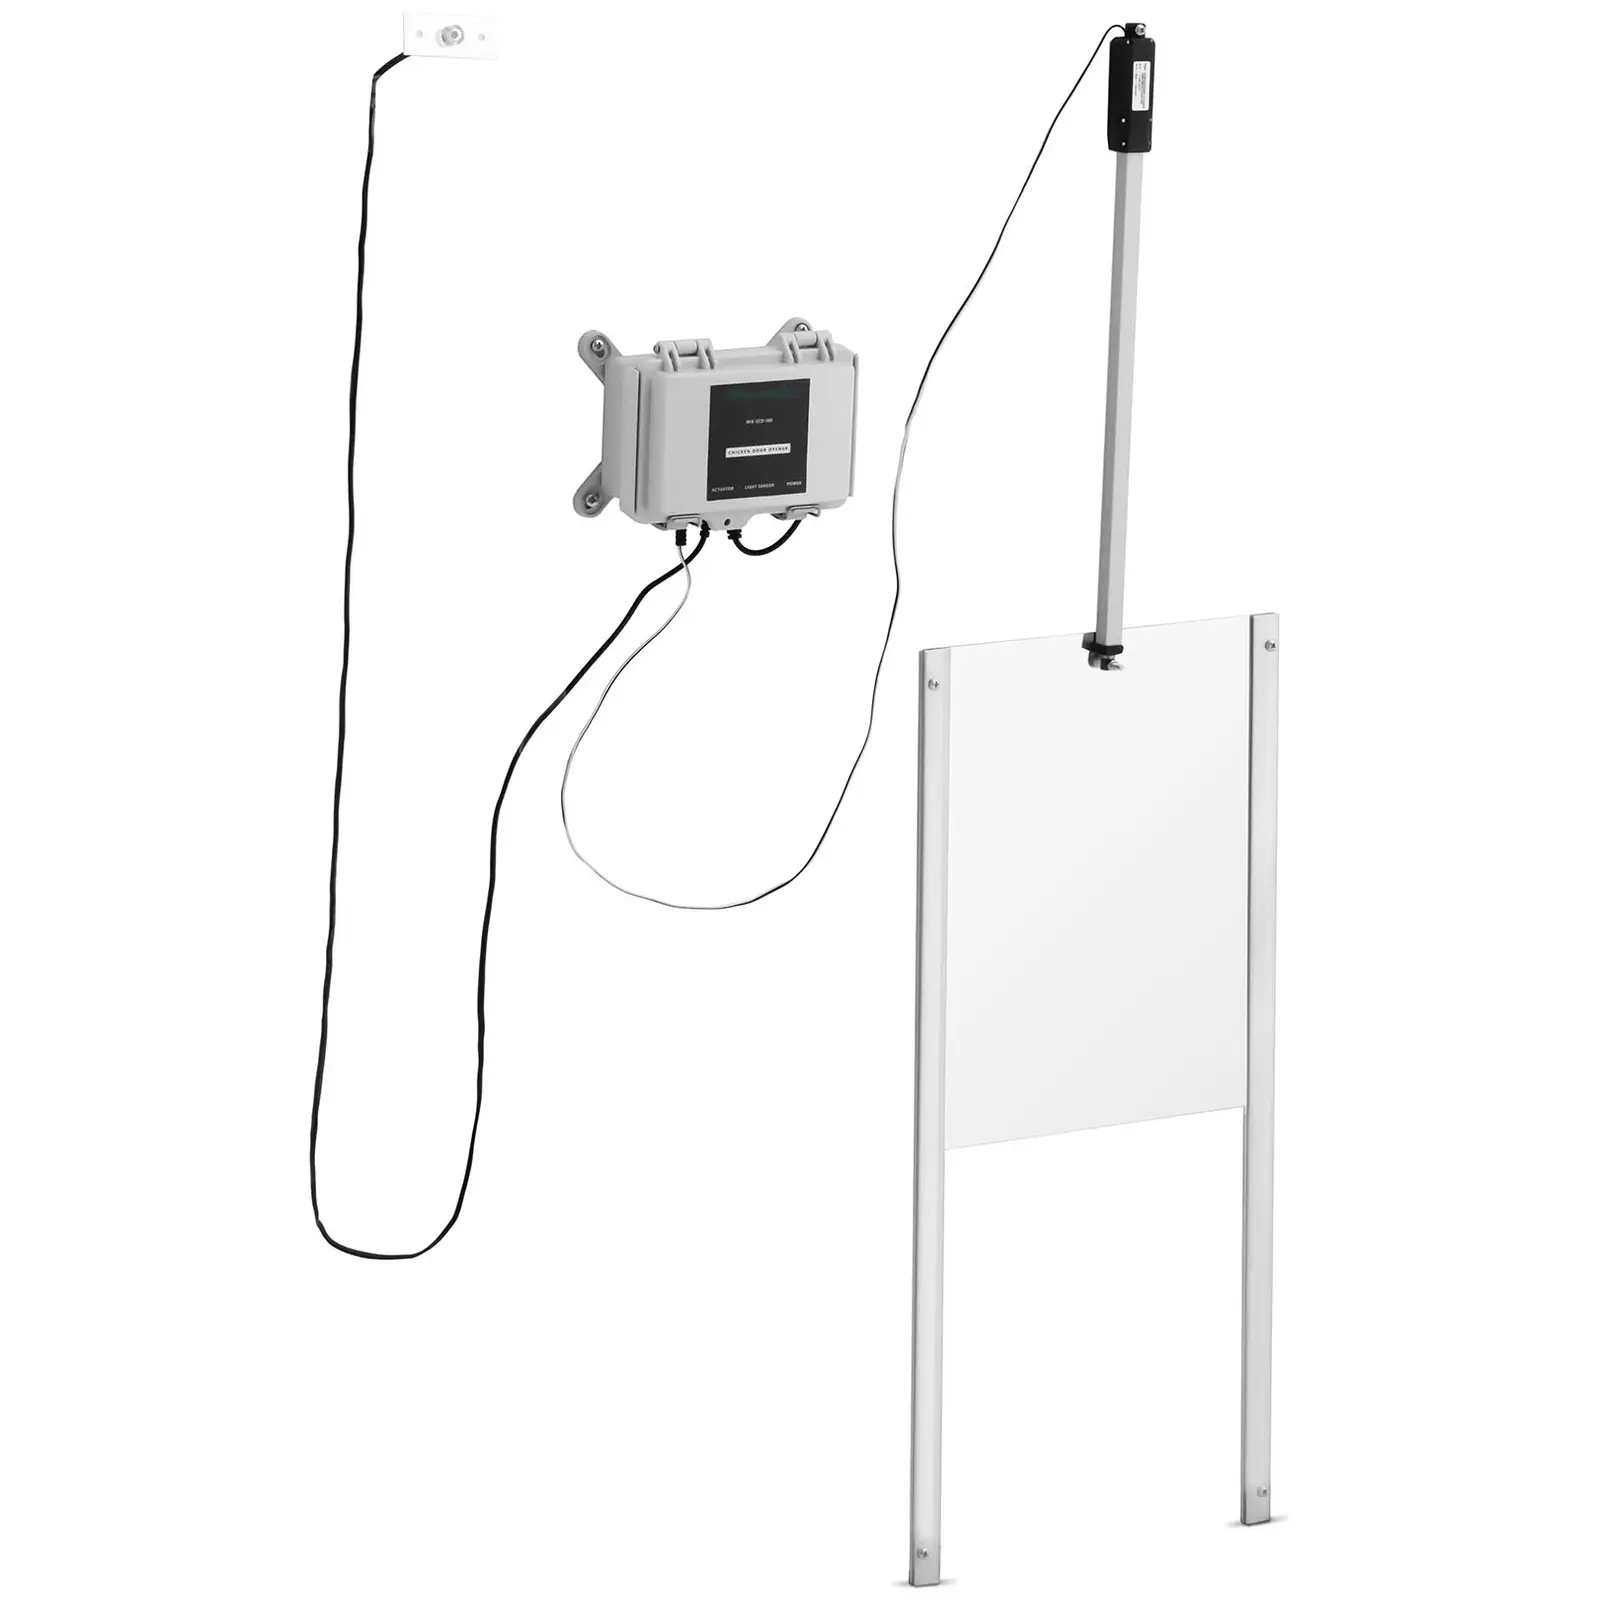 Puerta automática para gallinero - temporizador / sensor de luz - fuente de alimentación - carcasa impermeable - función antibloqueo